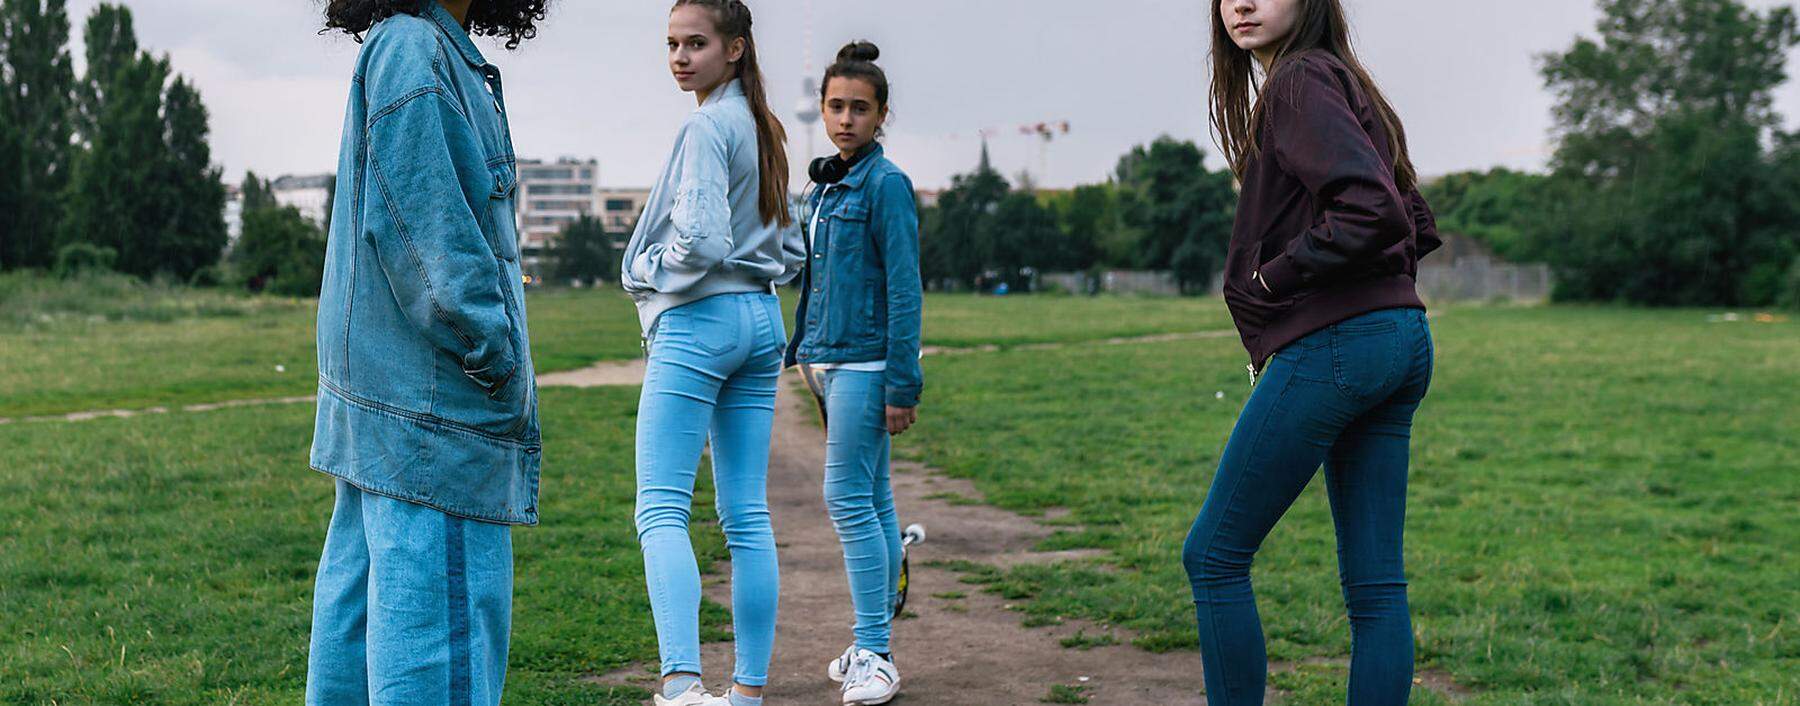 four teenage girls walking outdoors in park